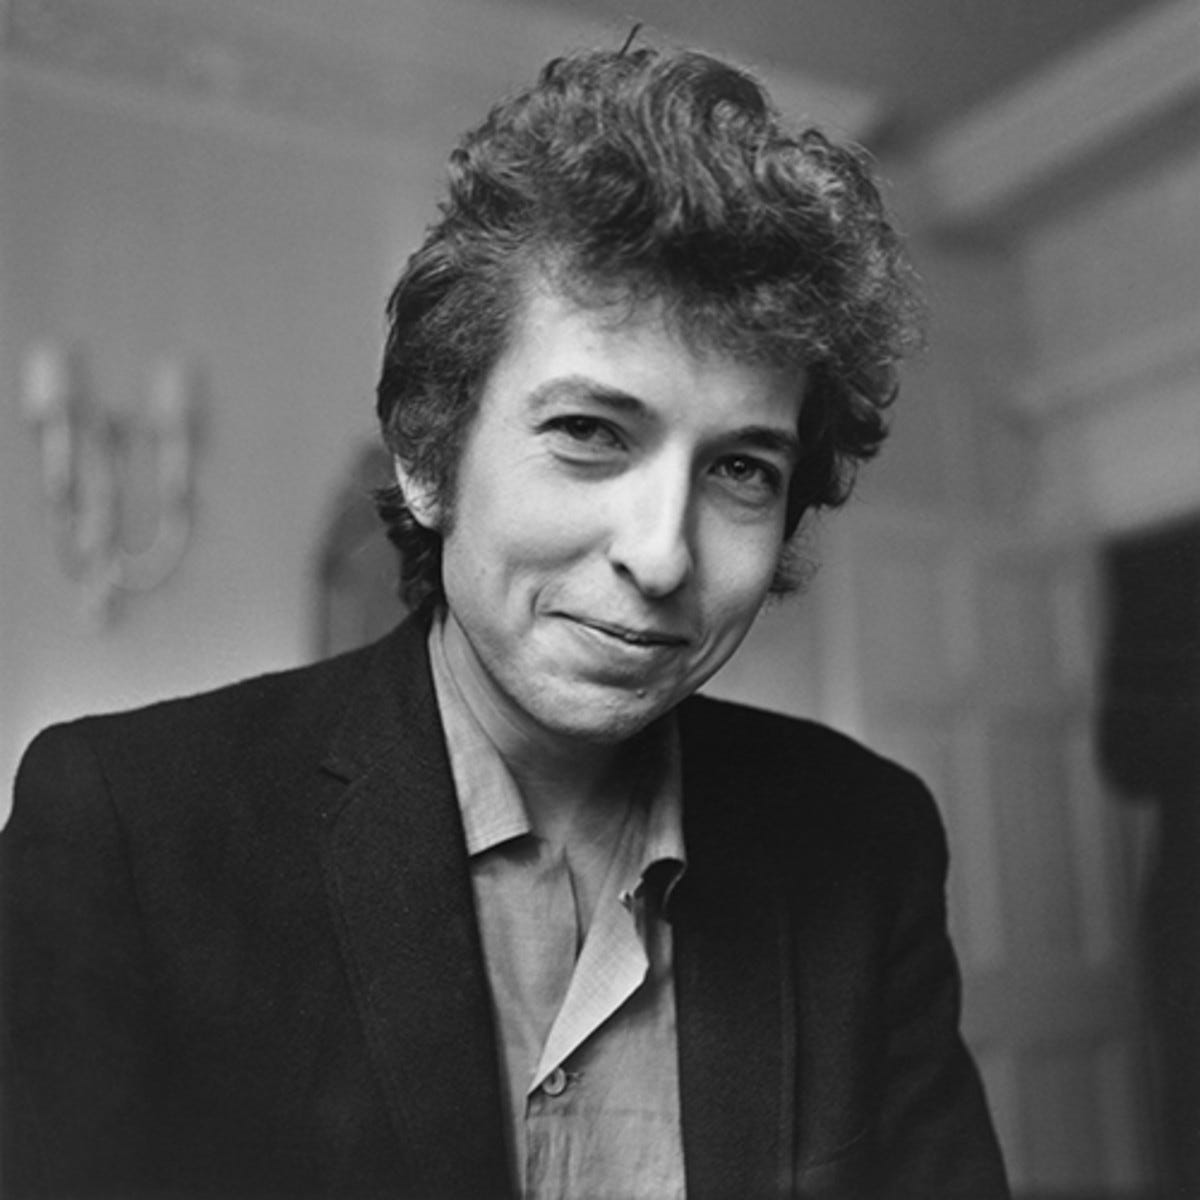 Bob Dylan - Songs, Albums &amp; Life - Biography